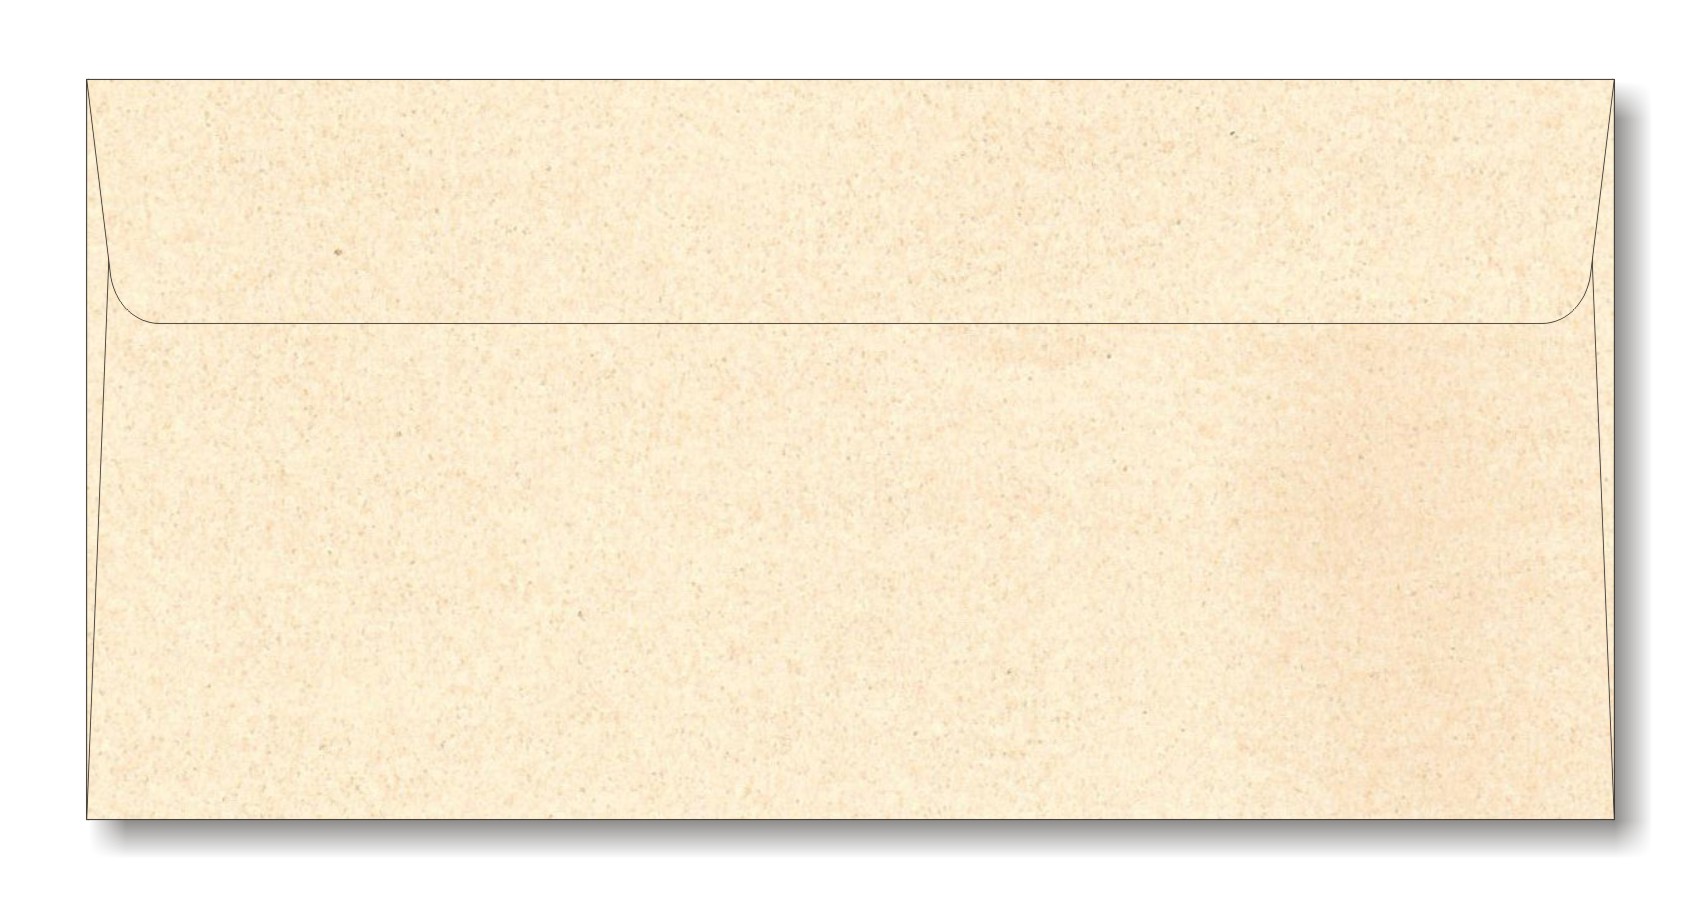 Shagun Envelope Design 2-10056